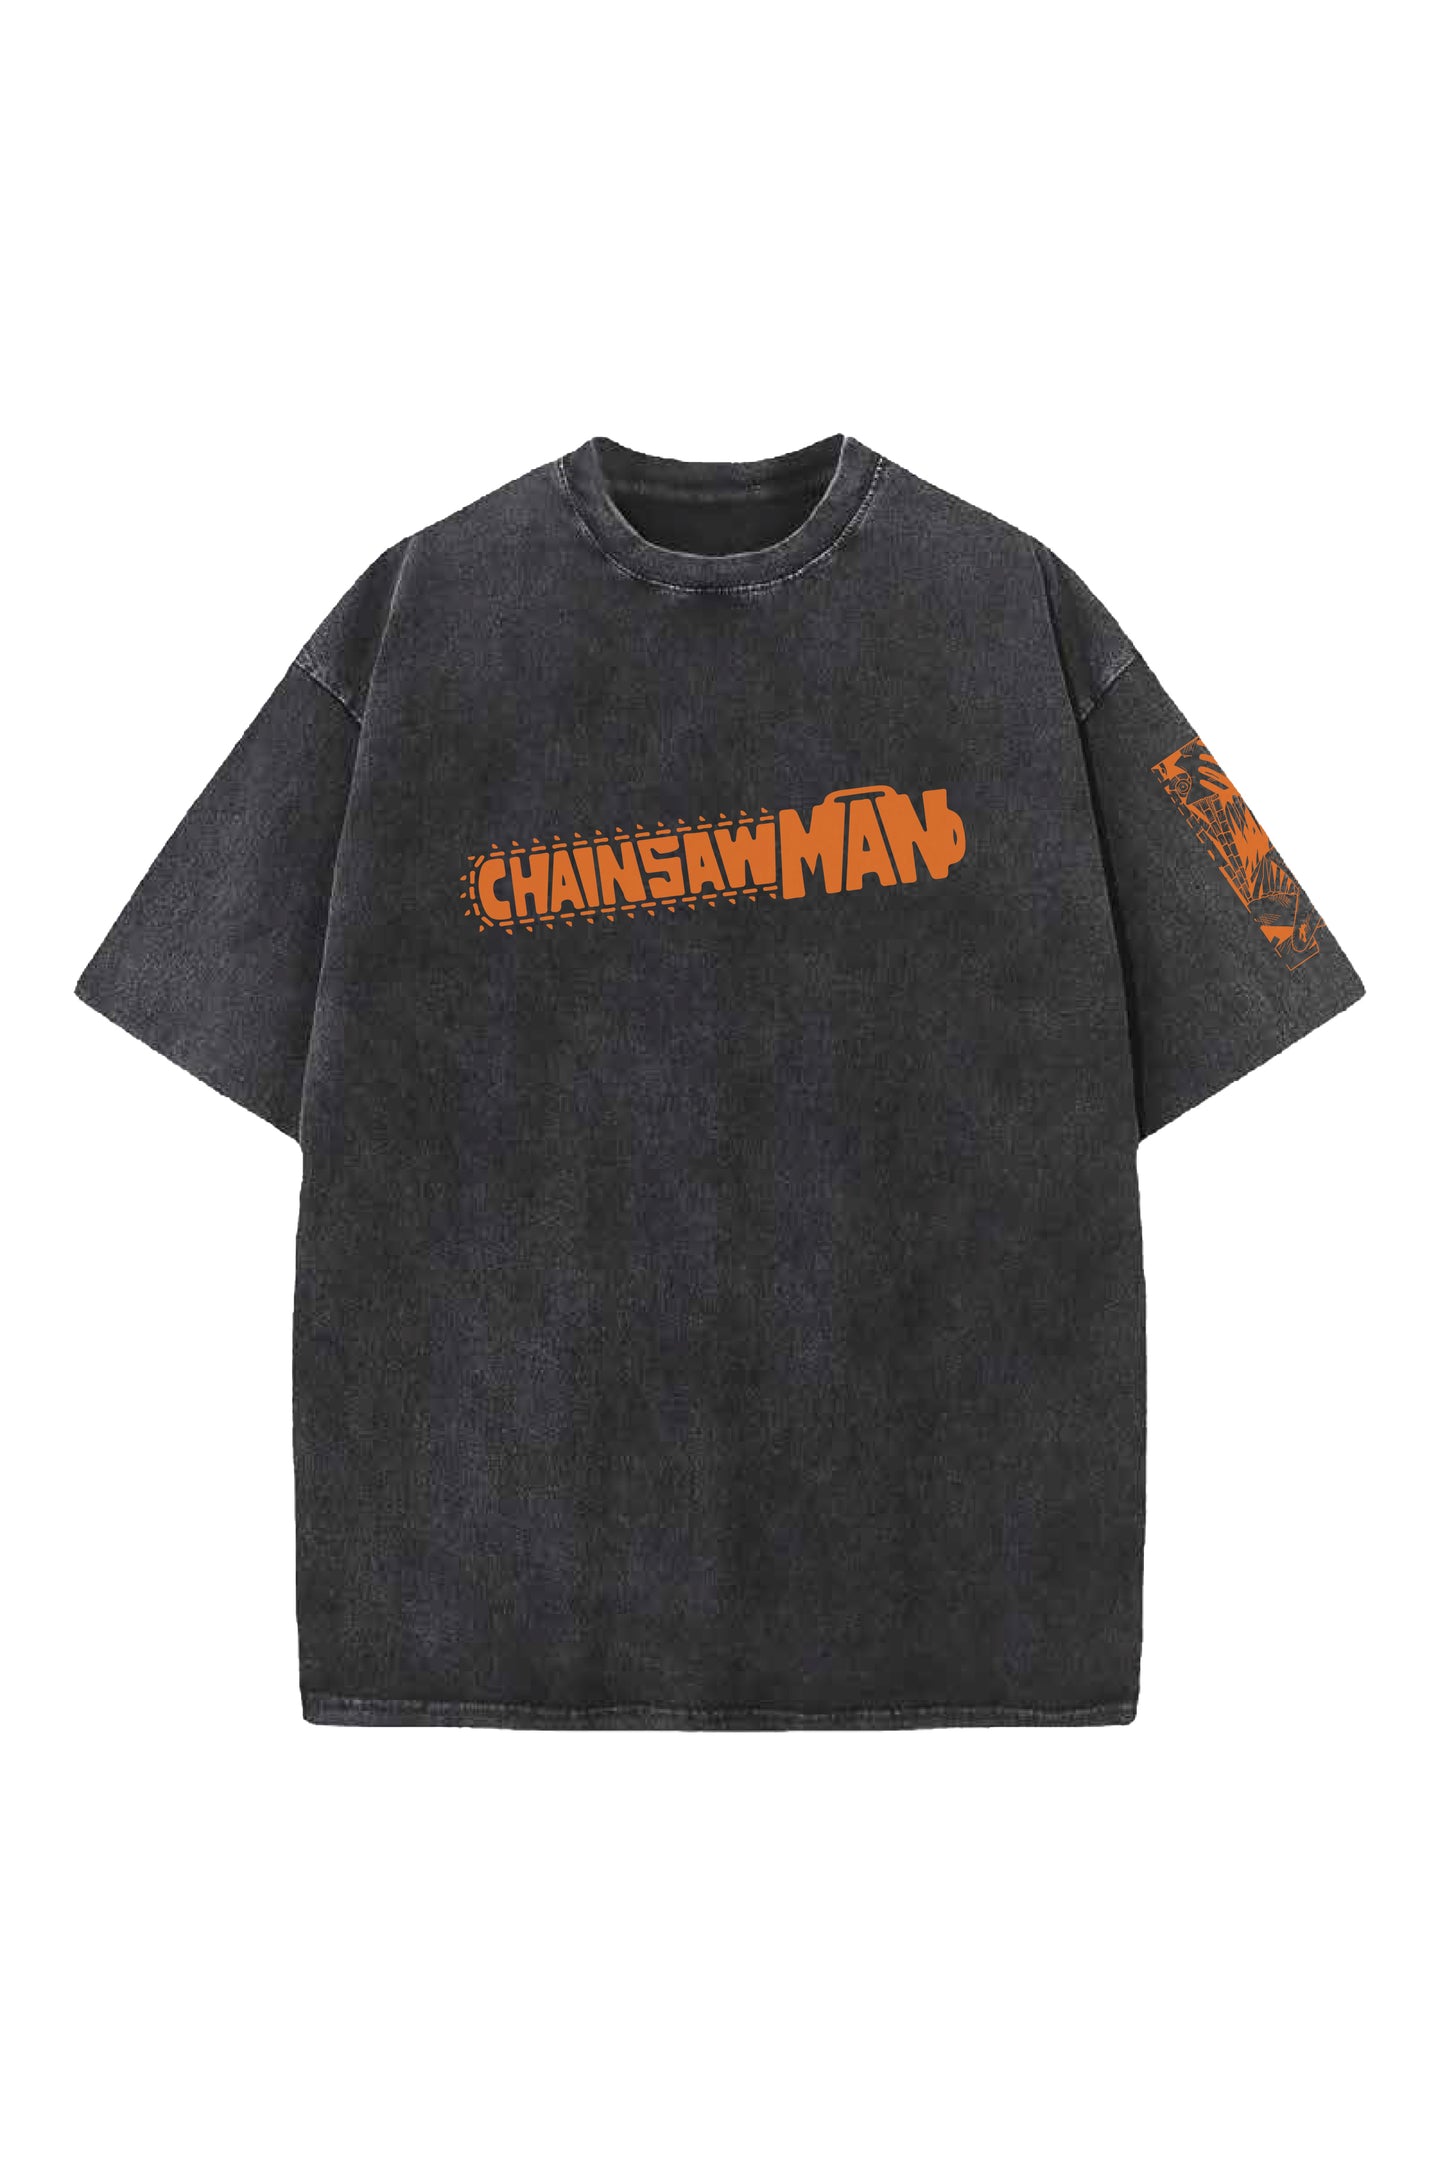 Chainsawman Designed Vintage Oversized T-shirt